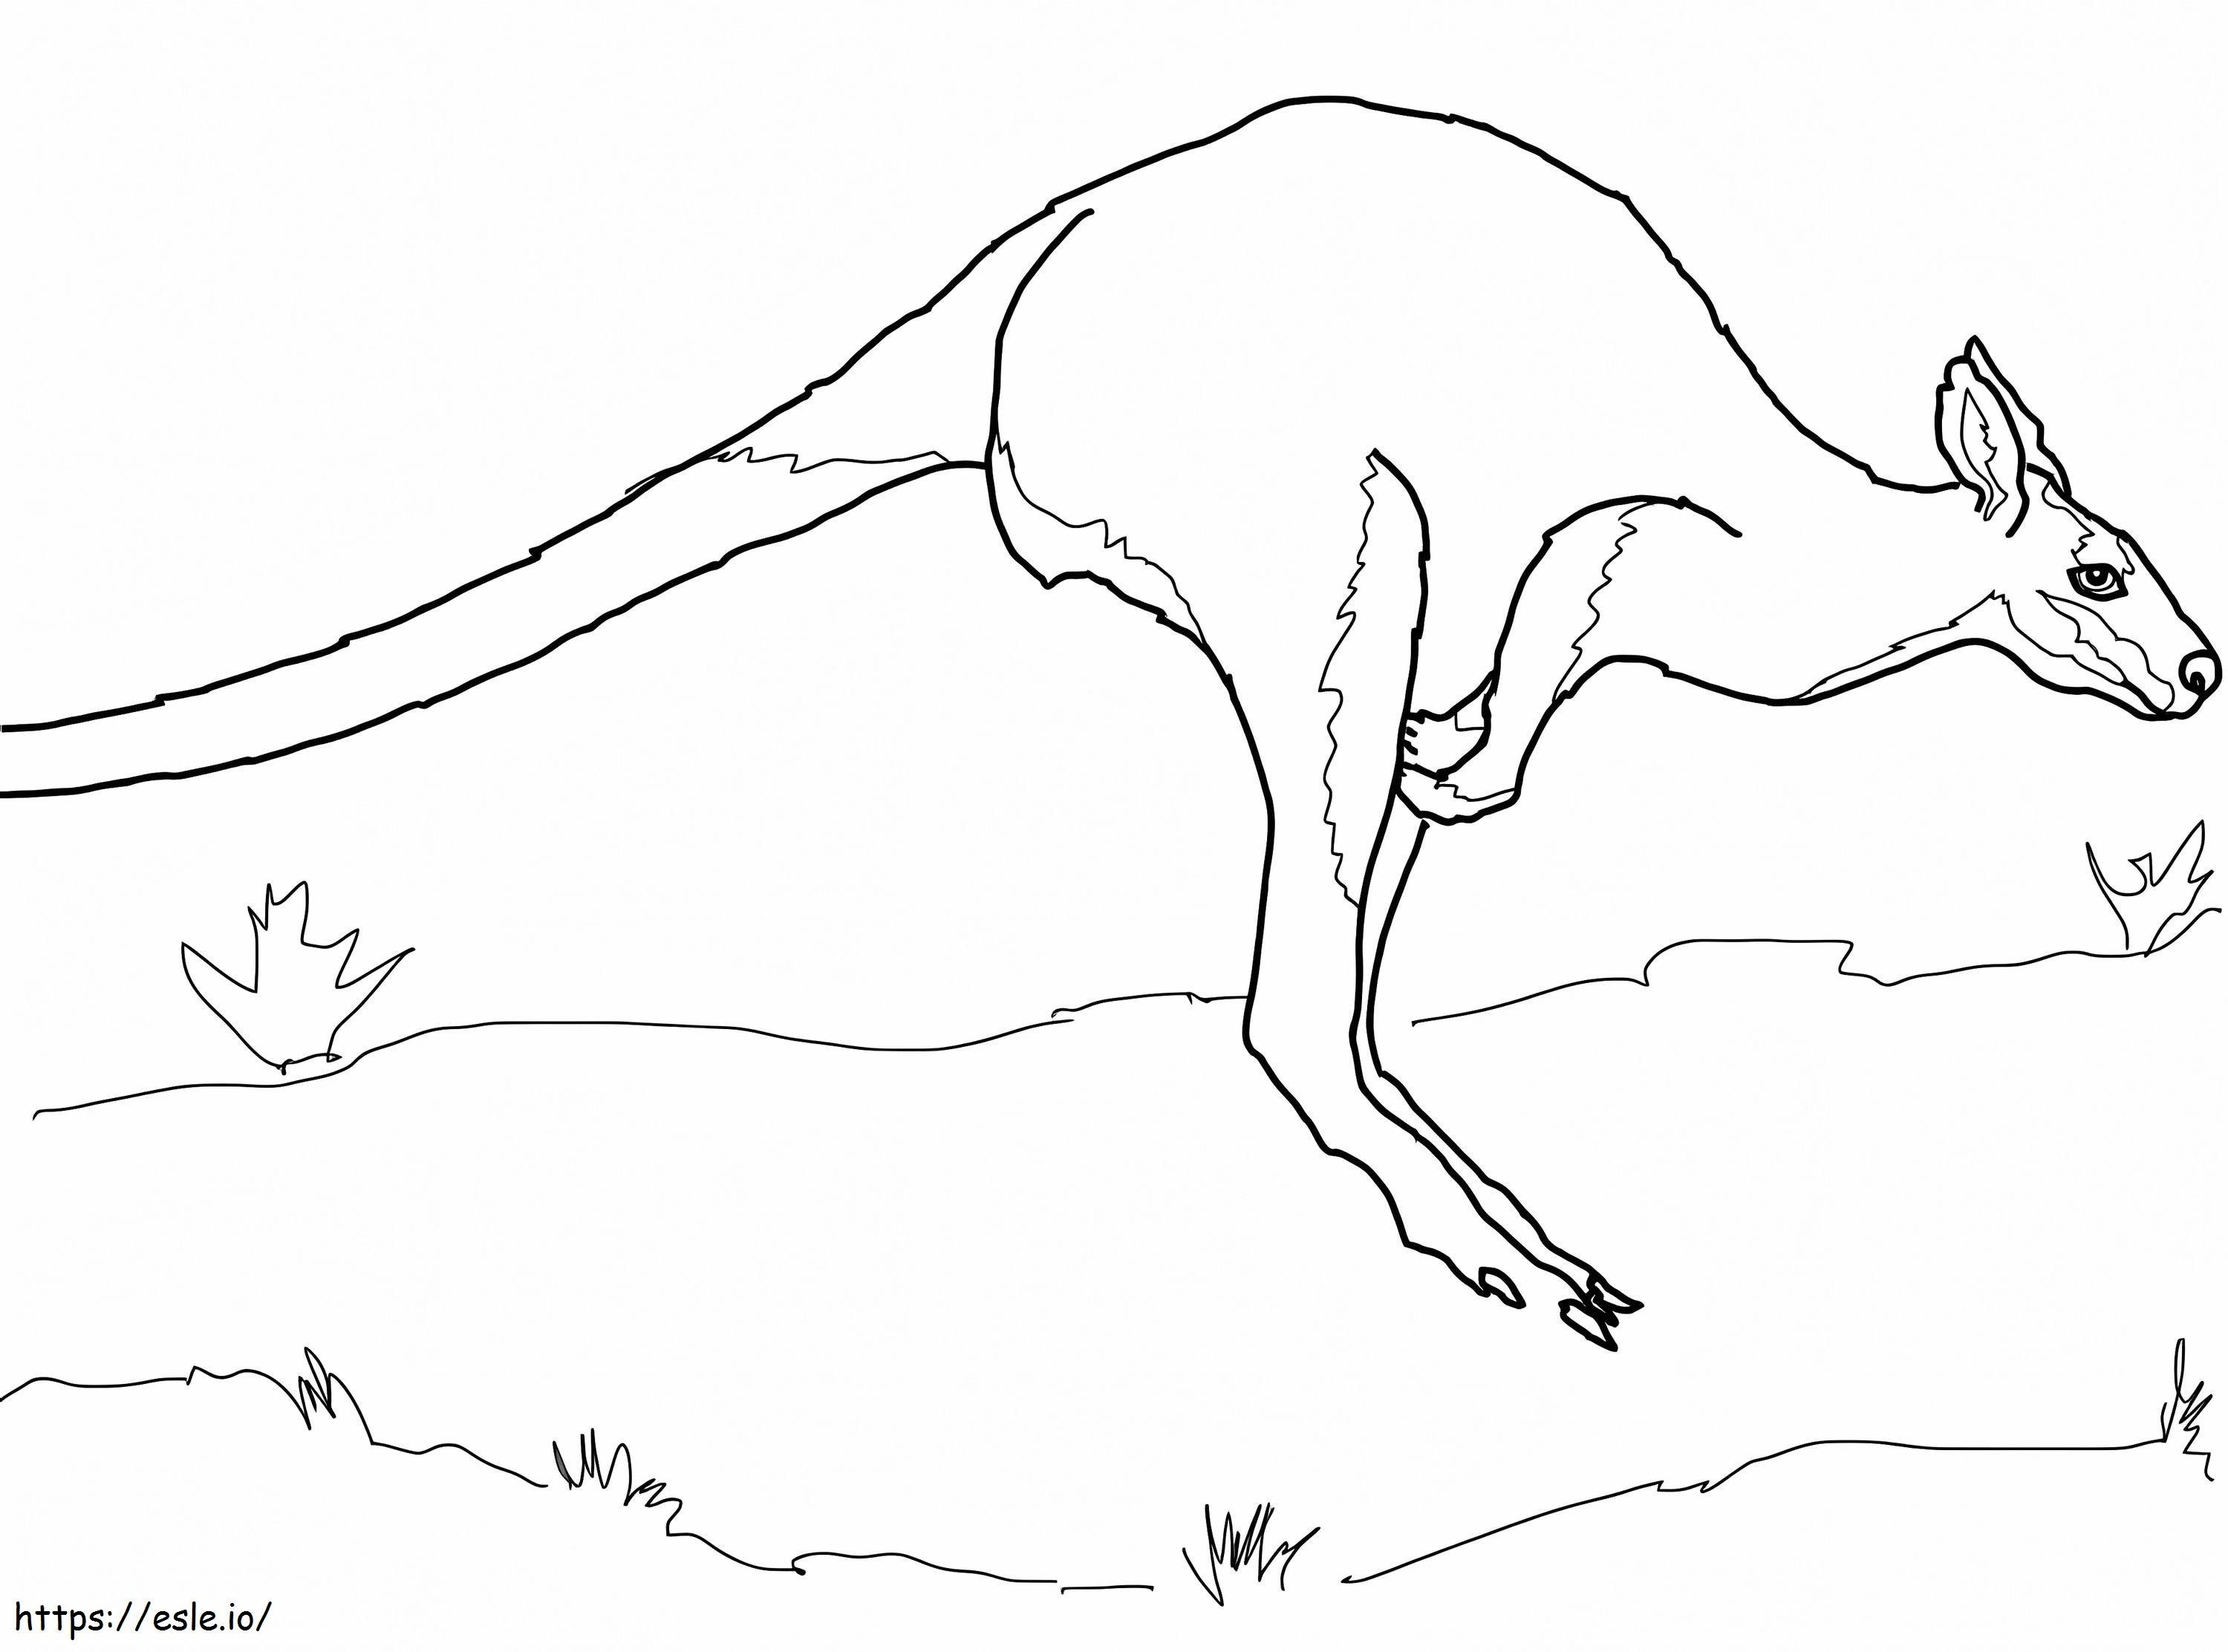 Wallaby atlama boyama